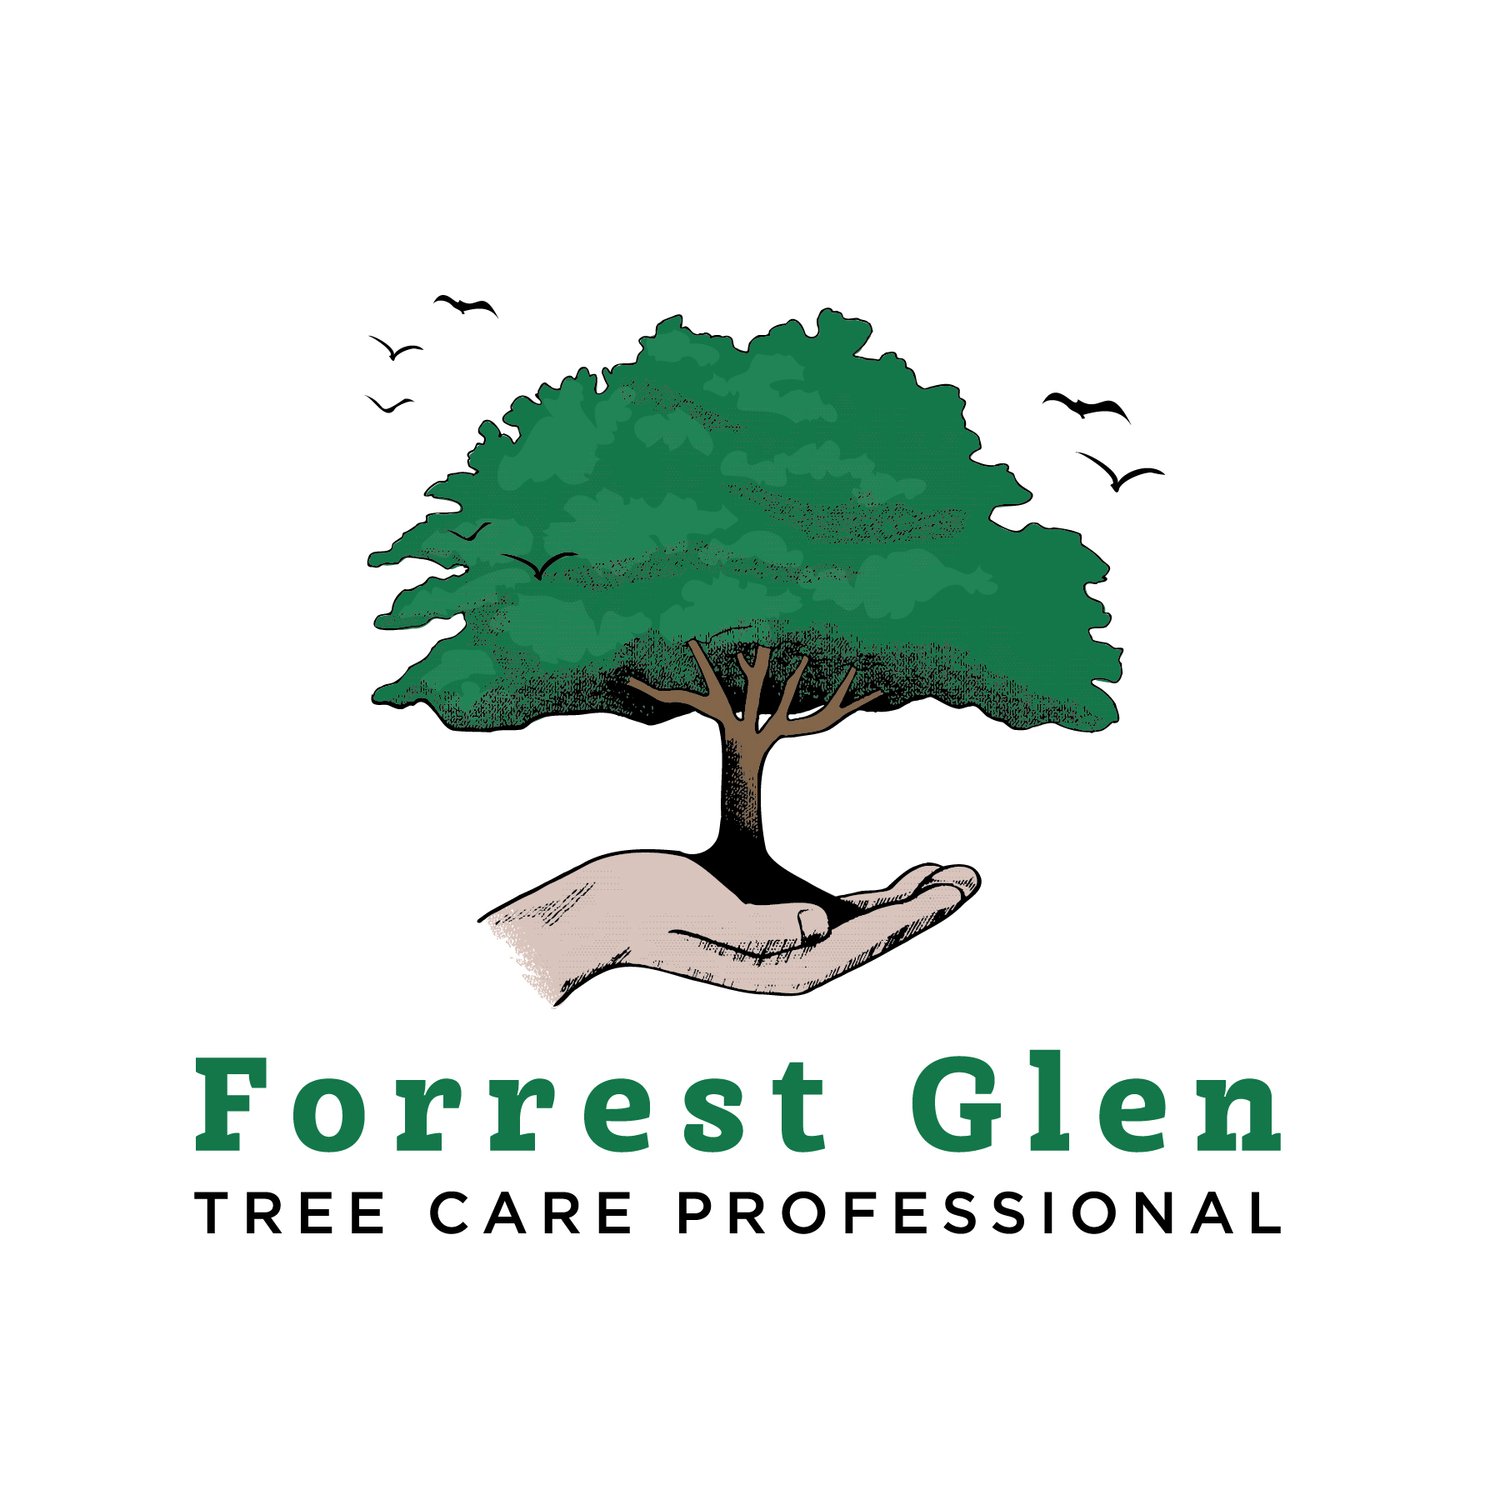 Forrest Glen Tree Care